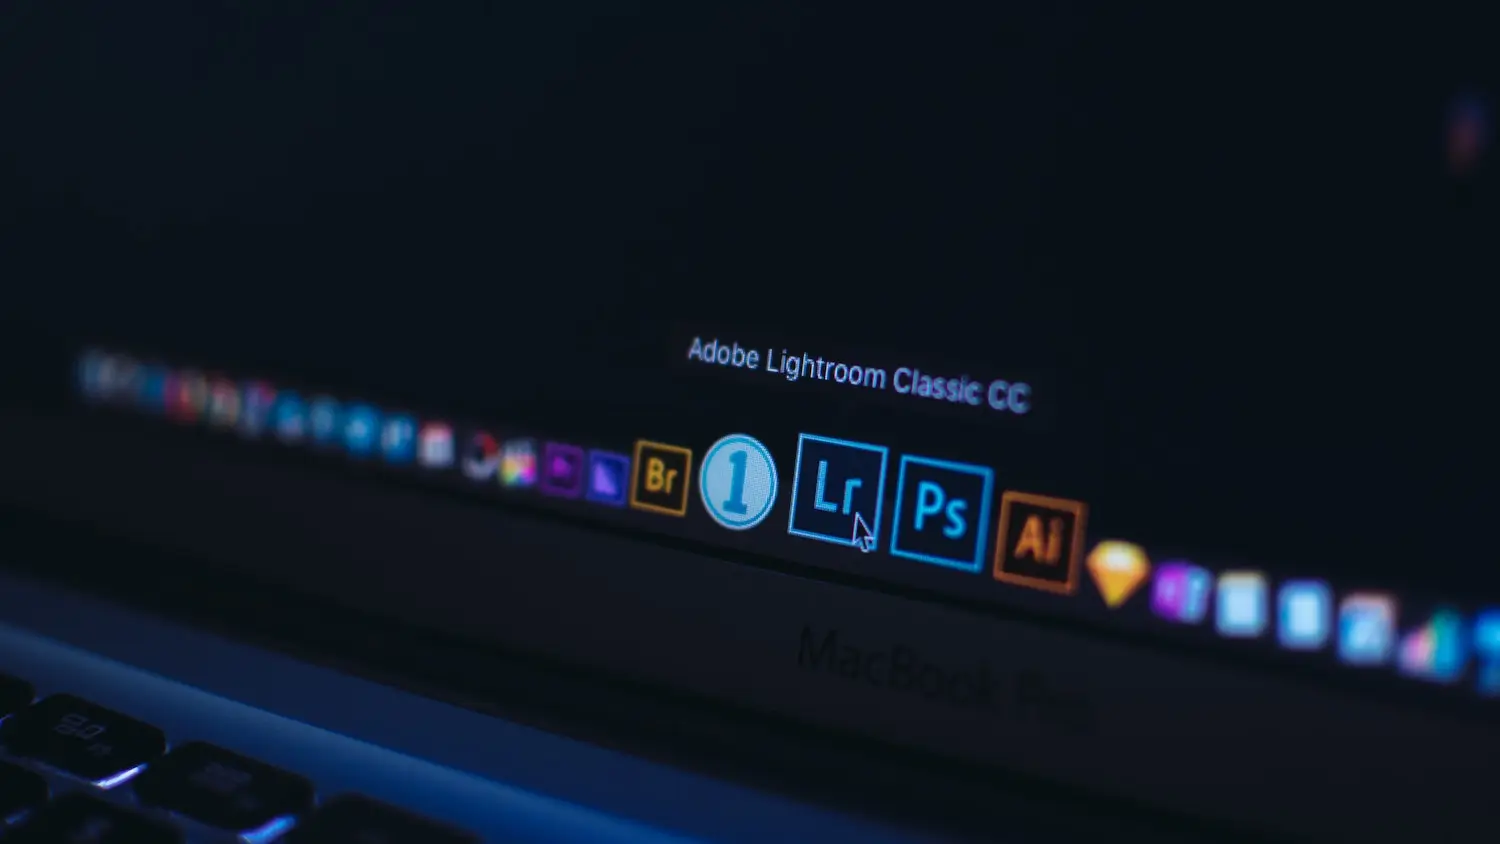 Lightroom flagship tool Adobe Creative Suite 1